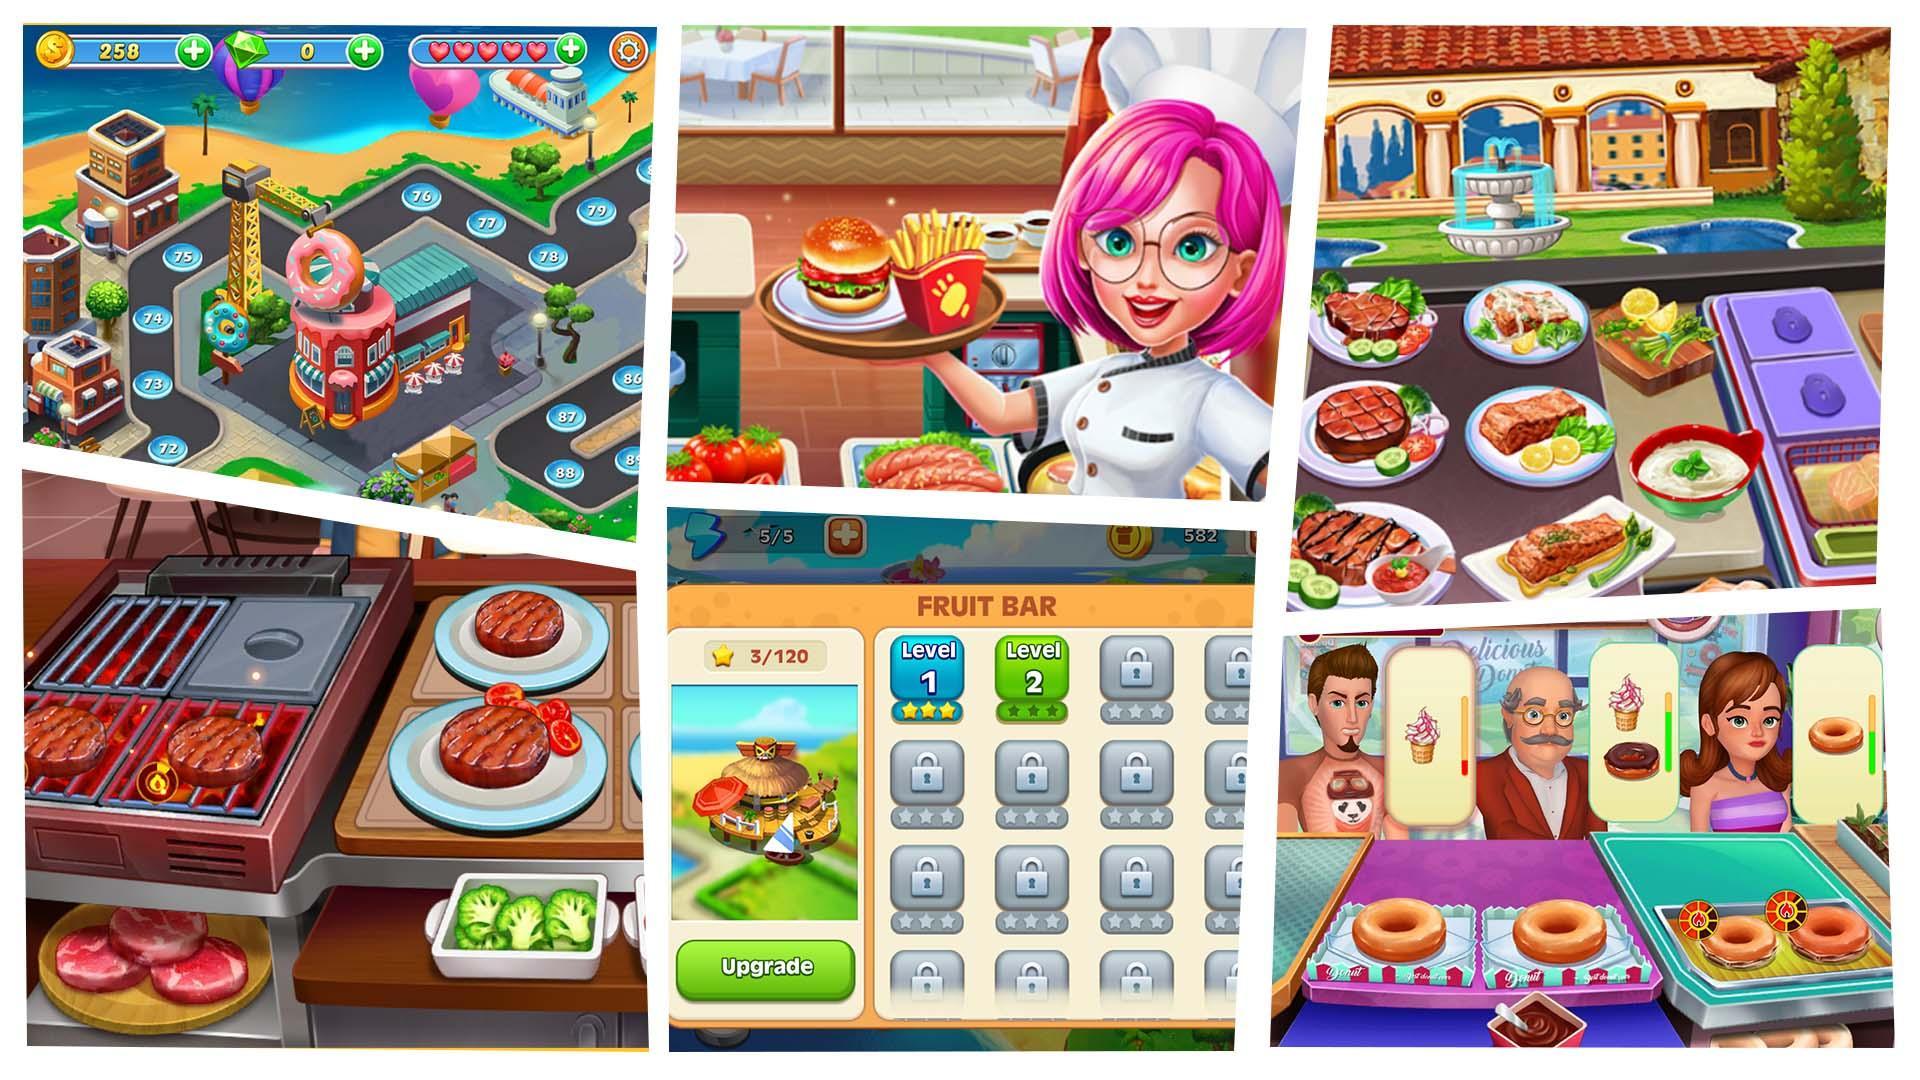 Screenshot 1 of 瘋狂烹飪漢堡遊戲 183.0